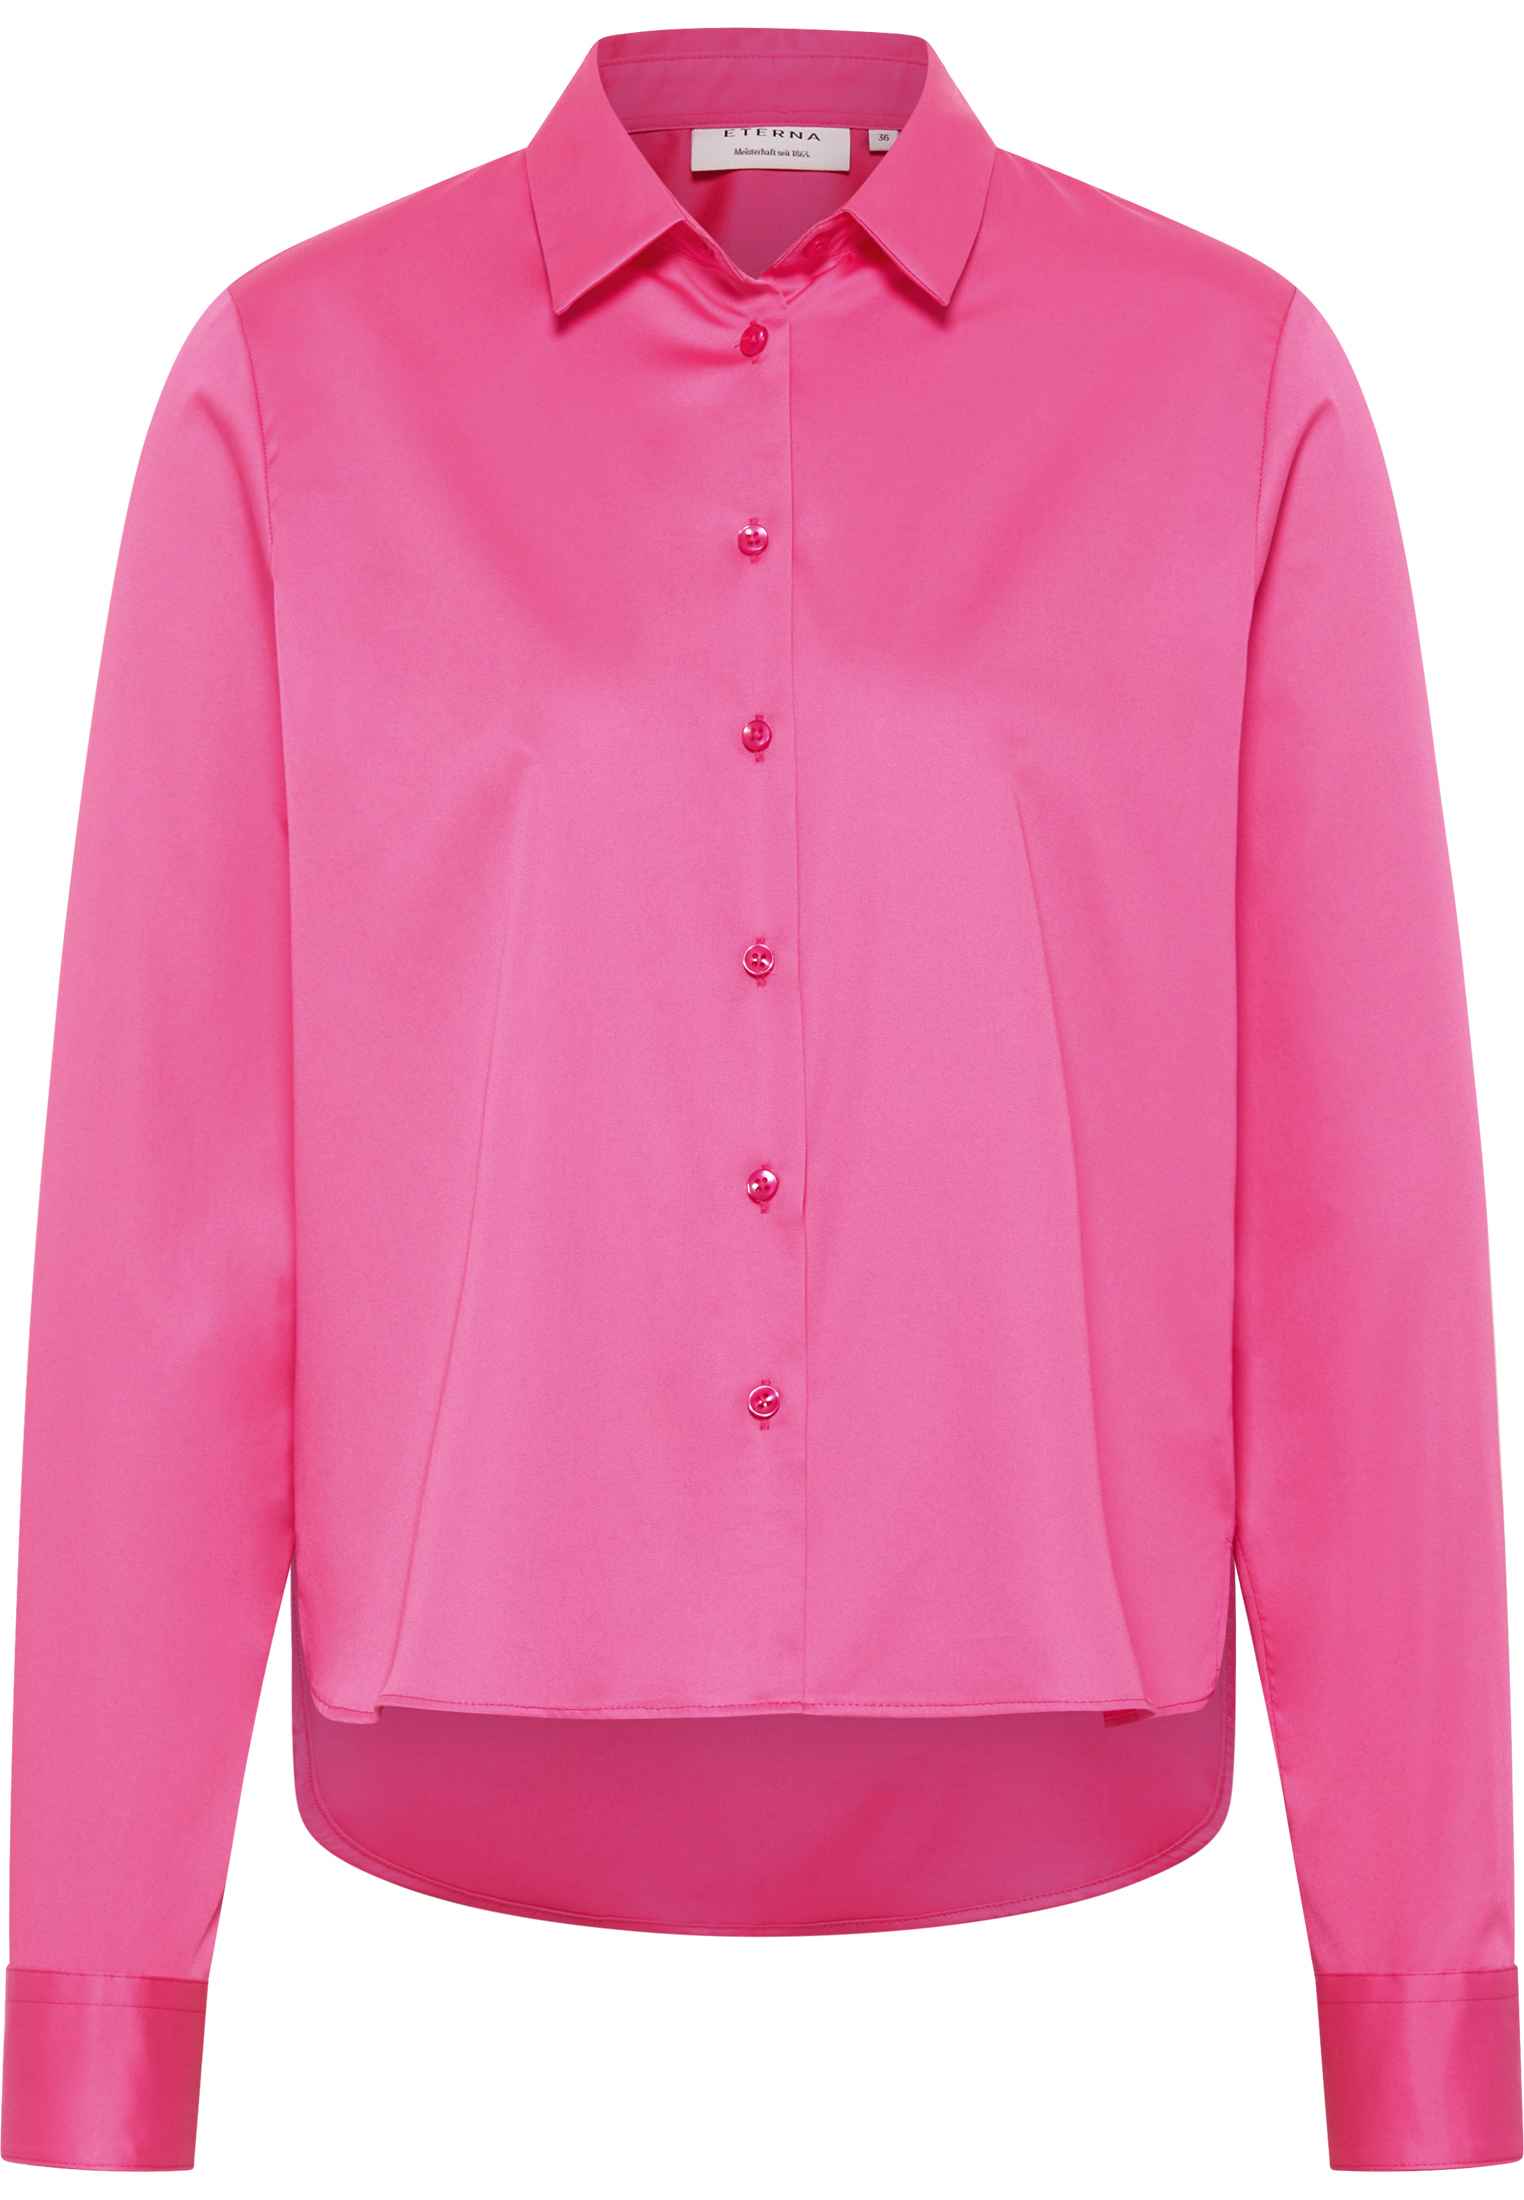 Satin Shirt Blouse pink 52 | pink 2BL04469-15-21-52-1/1 in long | | | sleeve plain